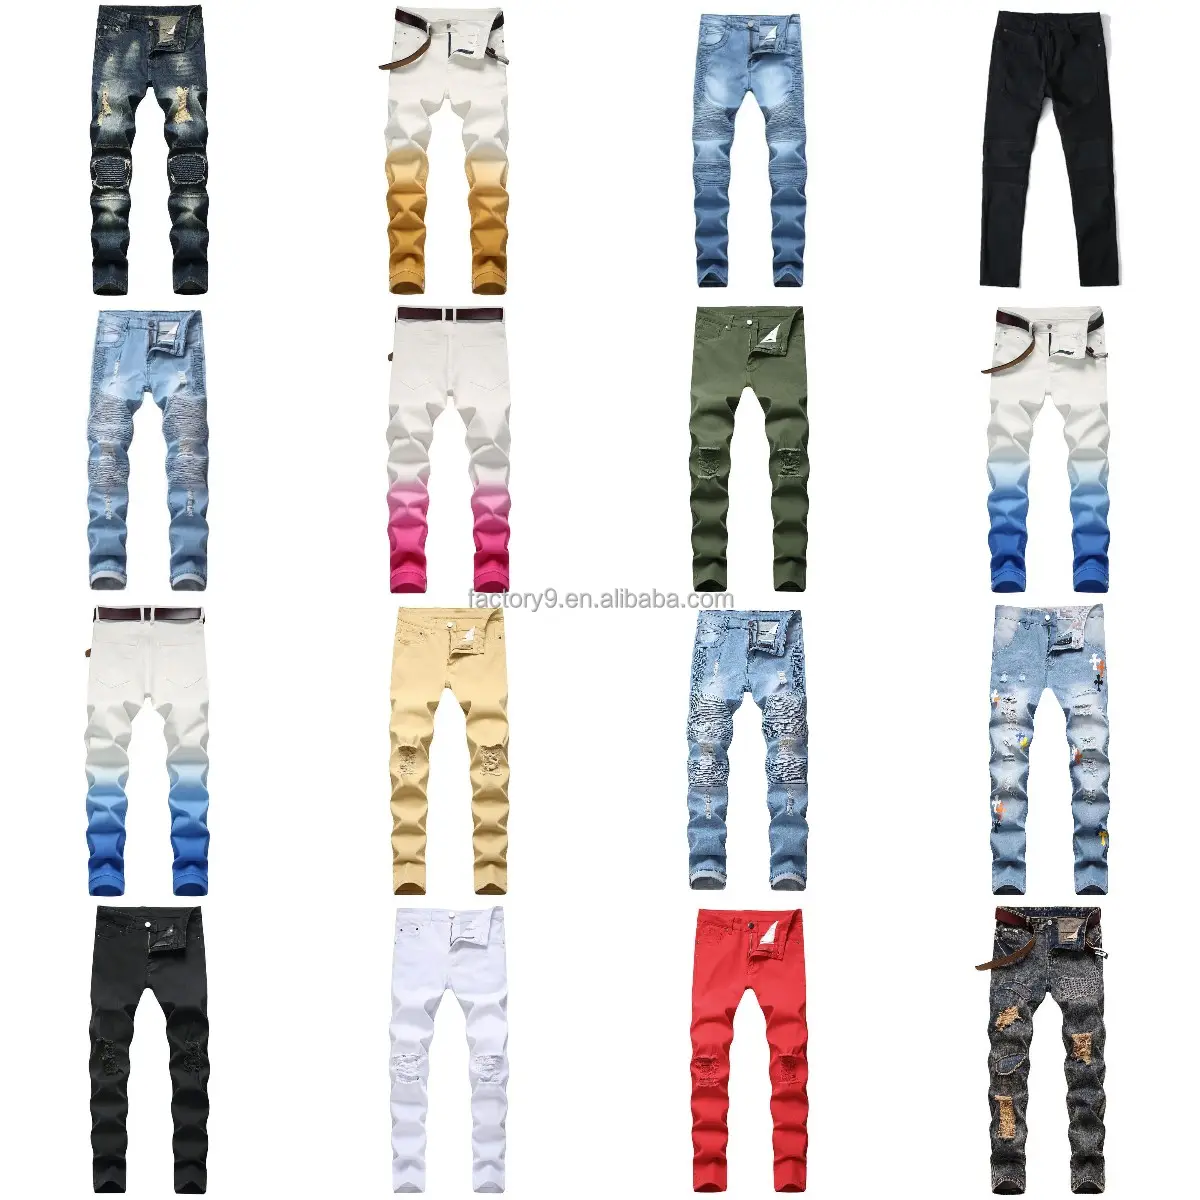 Wholesale Street fashion pants custom color stacked jeans men's pants high quality jeans retro fit men's jeans